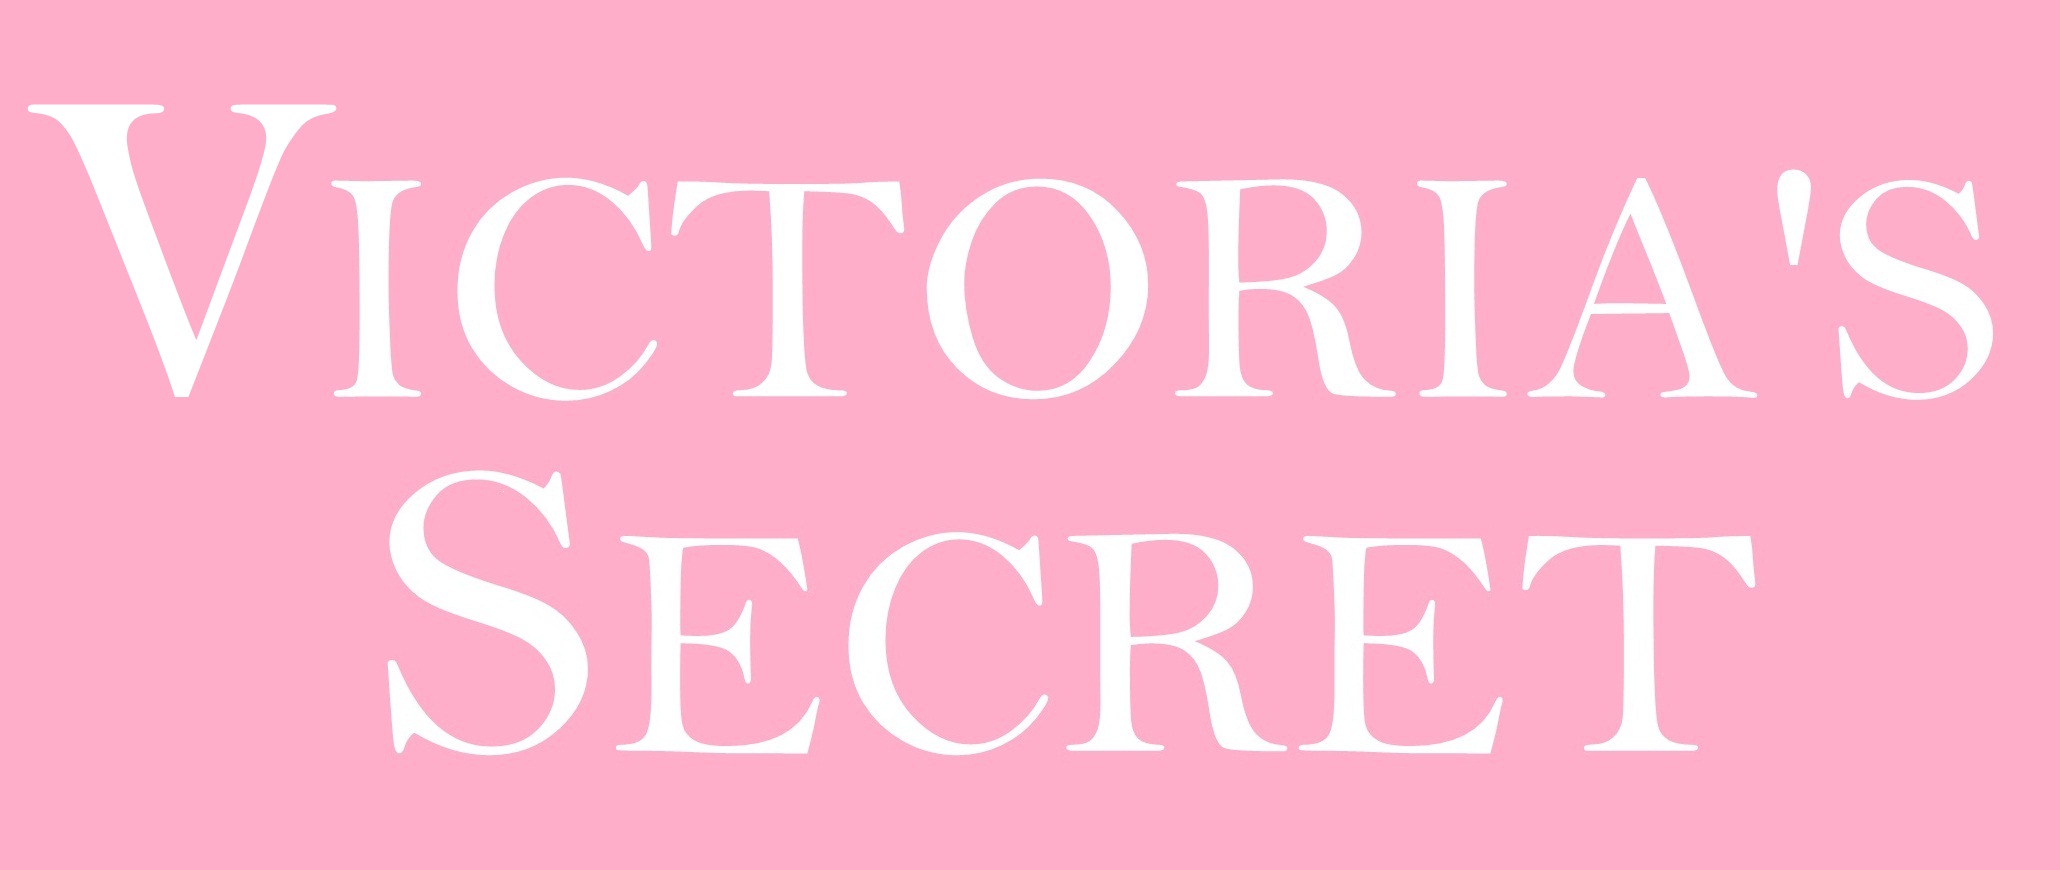 Pink Victorias Secret Wallpaper 3 Desktop Background   ImgX Wallpapers 2060x870